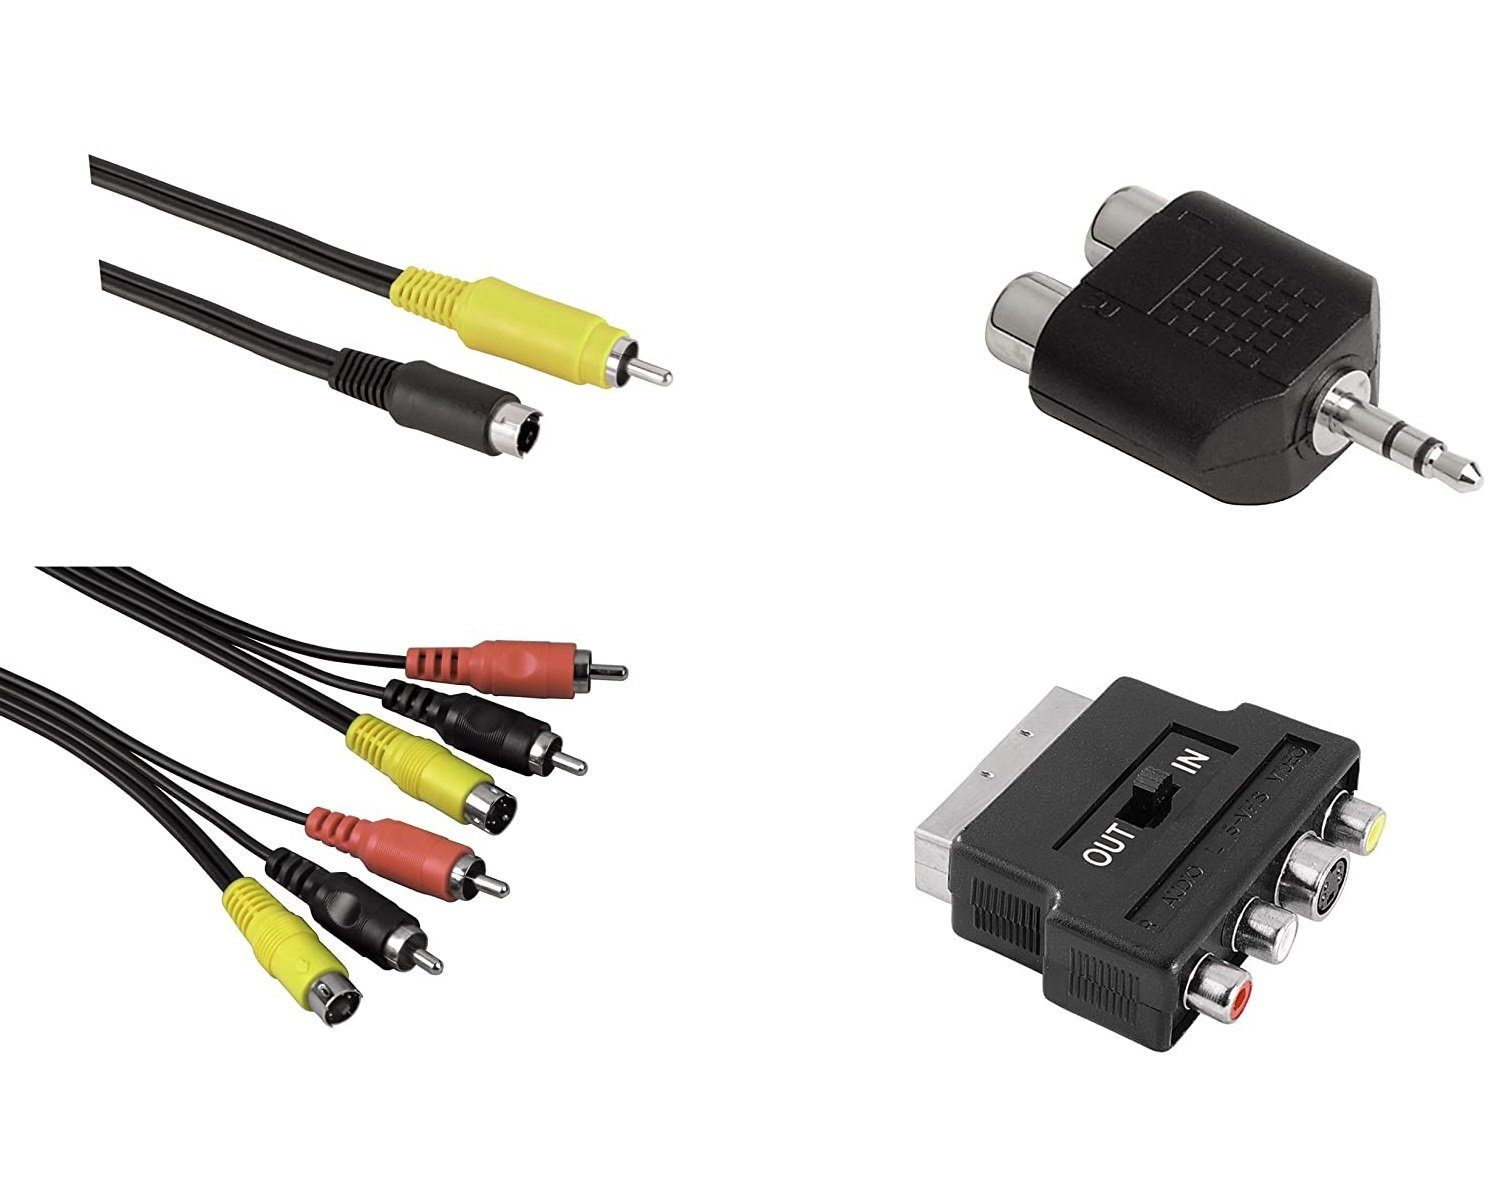 Hama Kabel-Set 5m S-Video 2x Cinch-Kabel Scart Audio-Kabel, Scart,S-Video,Cinch,3,5-mm-Klinke, (500 cm), Komplett-Set Anschluss-Kabel Scart-Adapter Klinken-Adapter, Universal